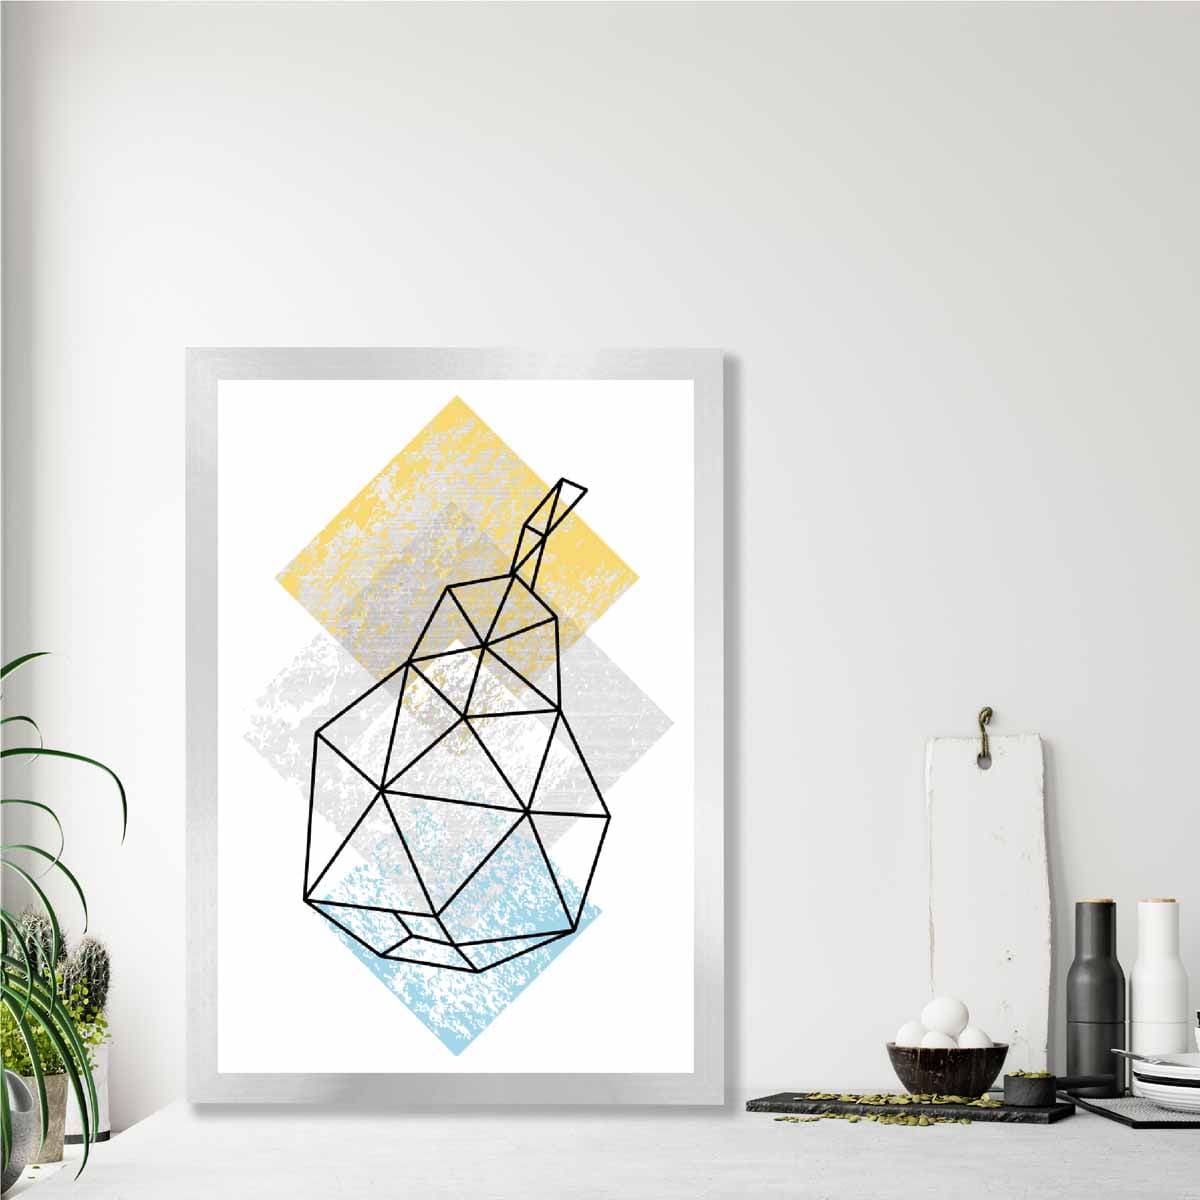 Geometric Fruit Line art Poster of Pear Yellow Grey Blue